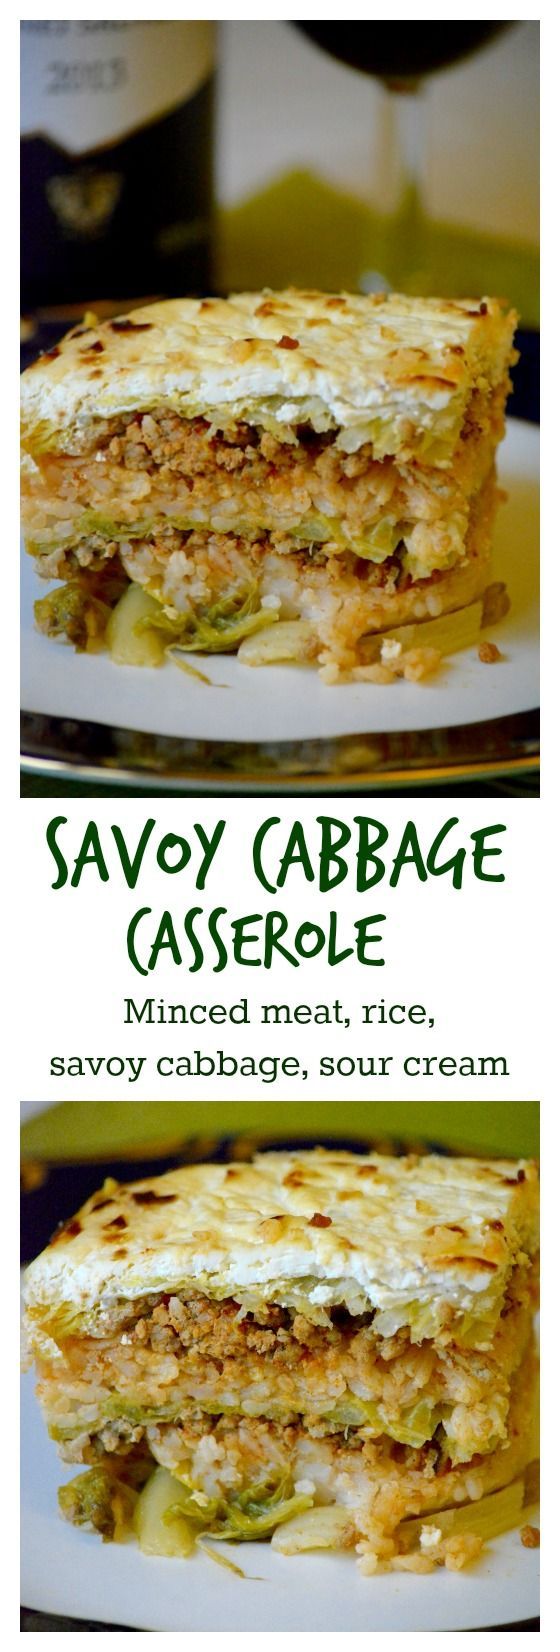 25 savoy cabbage recipes ideas